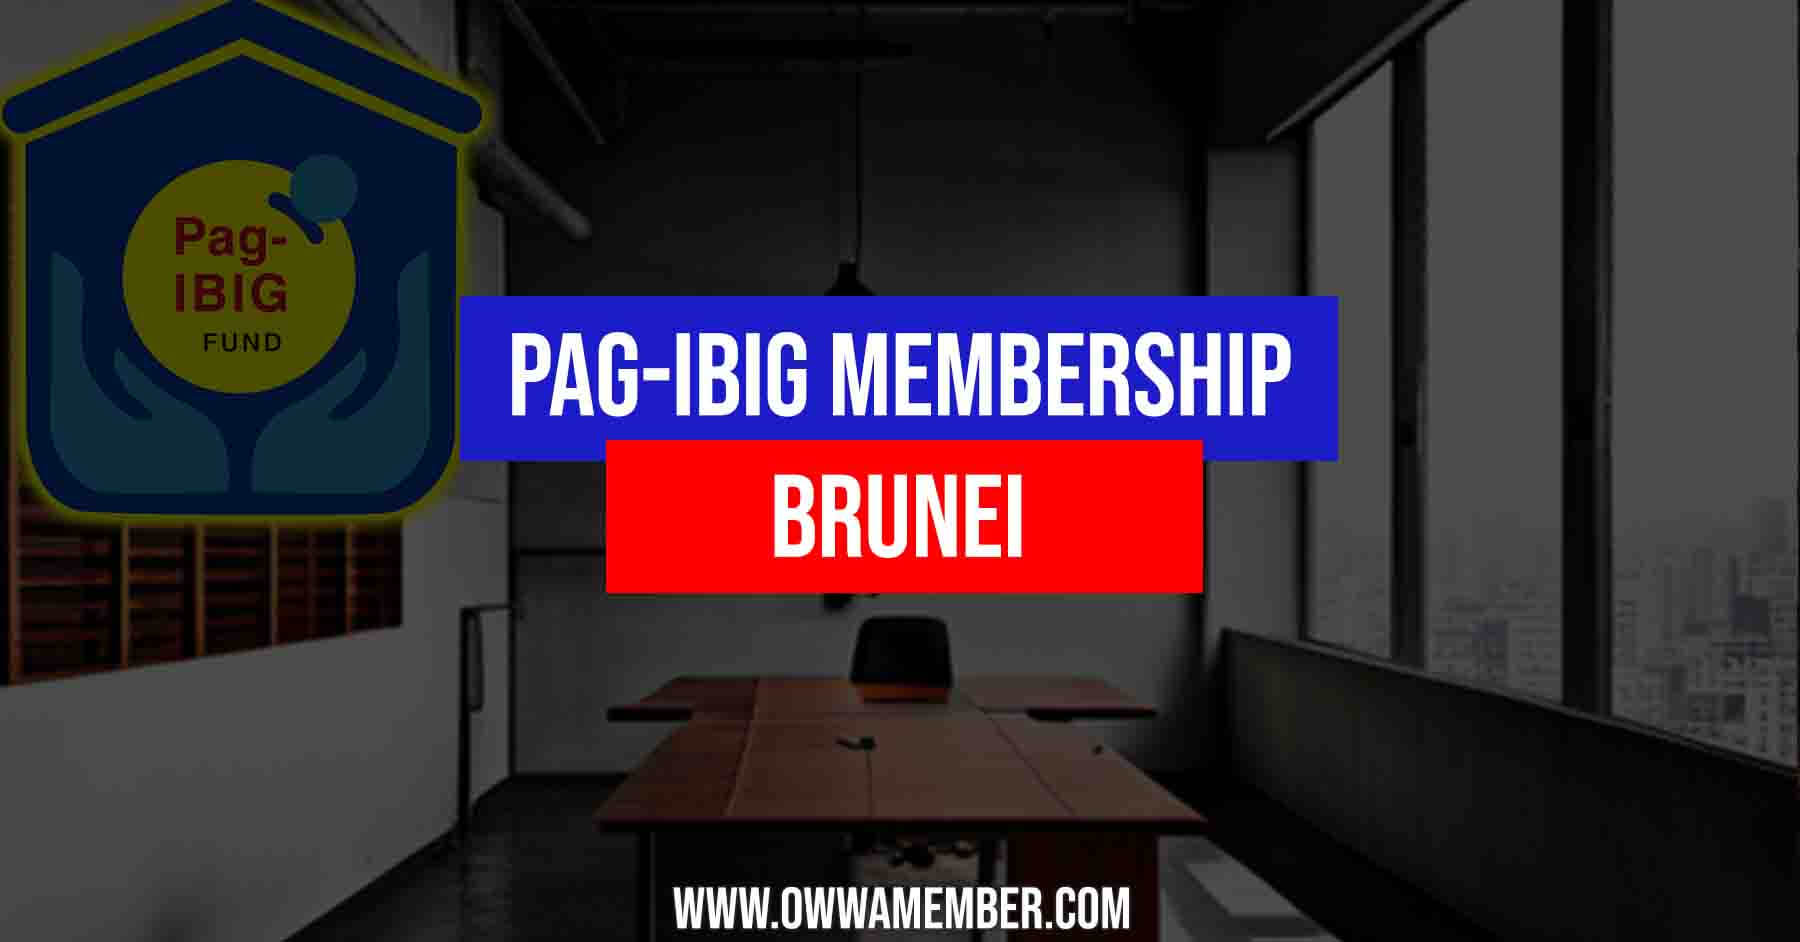 apply pagibig membership in brunei